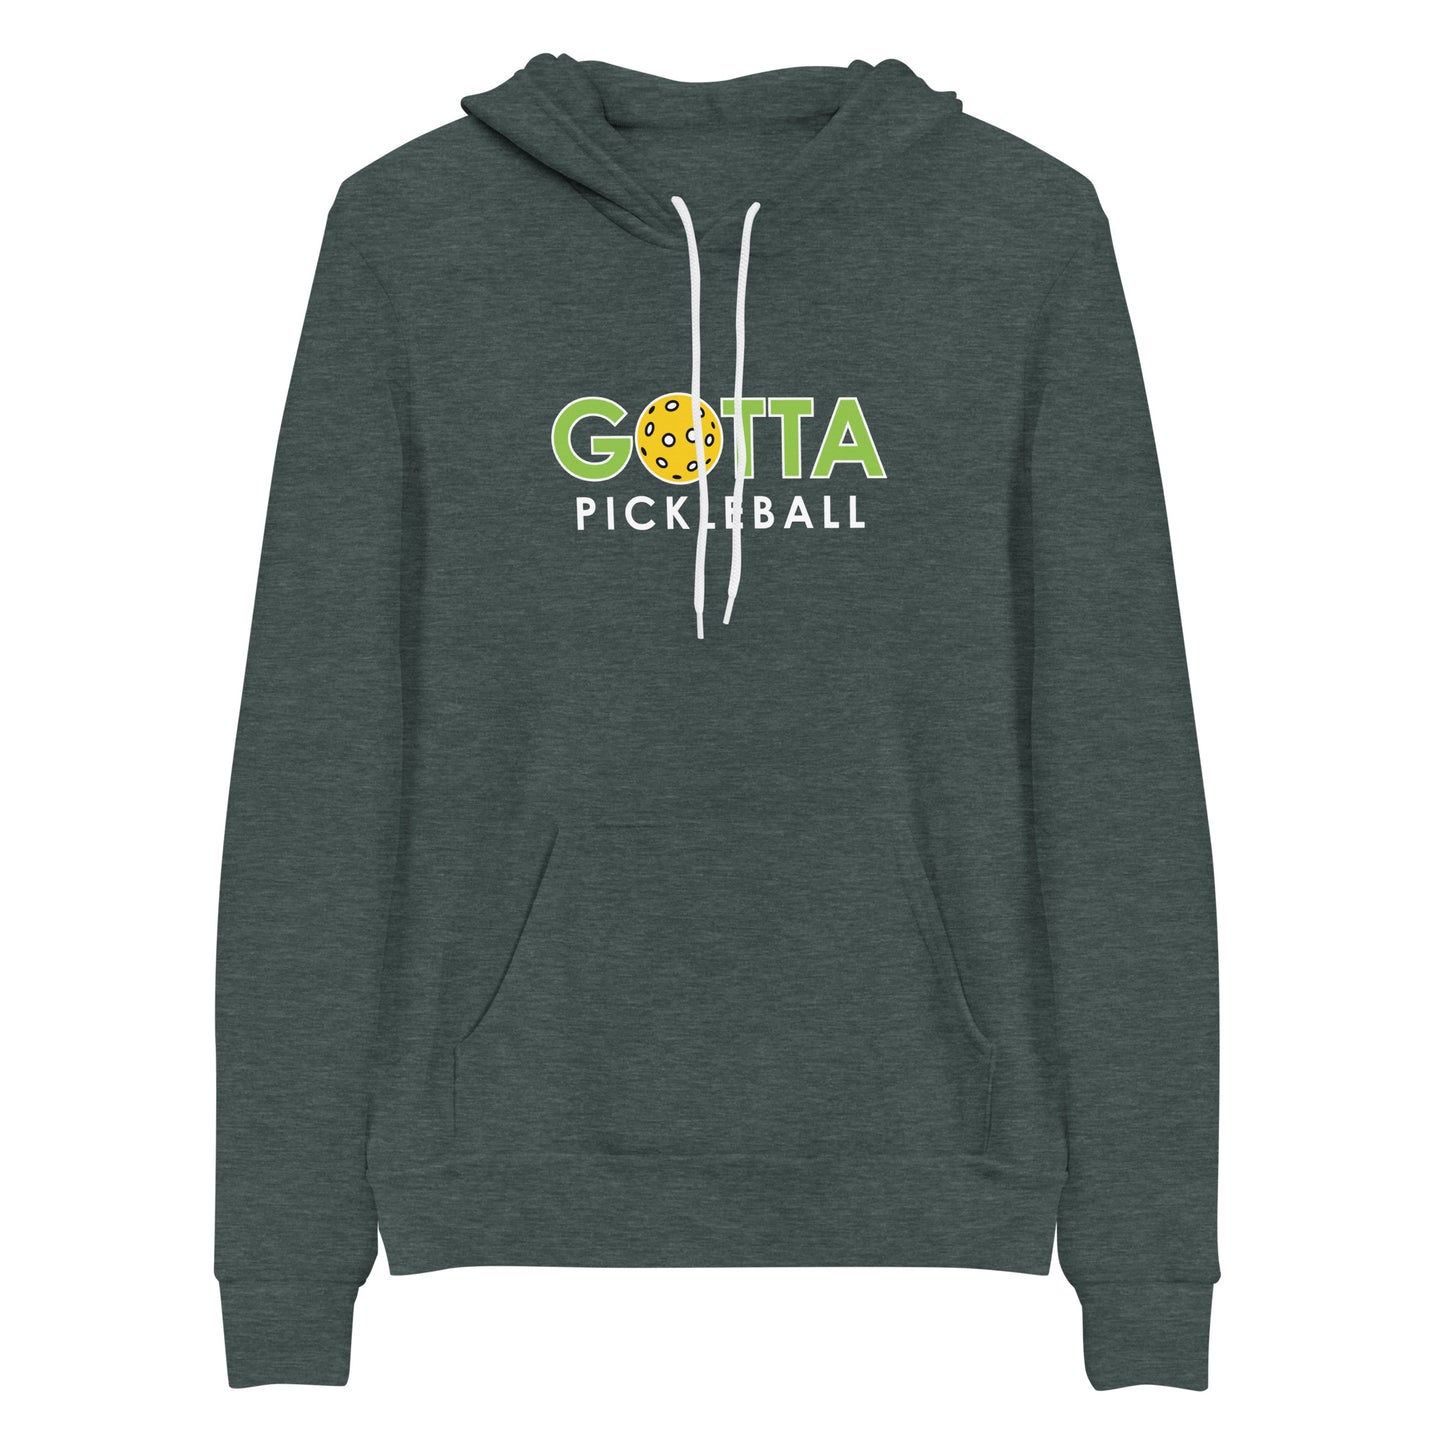 gotta pickleball logo on heather green lightweight fleece pullover hoodie sweatshirt